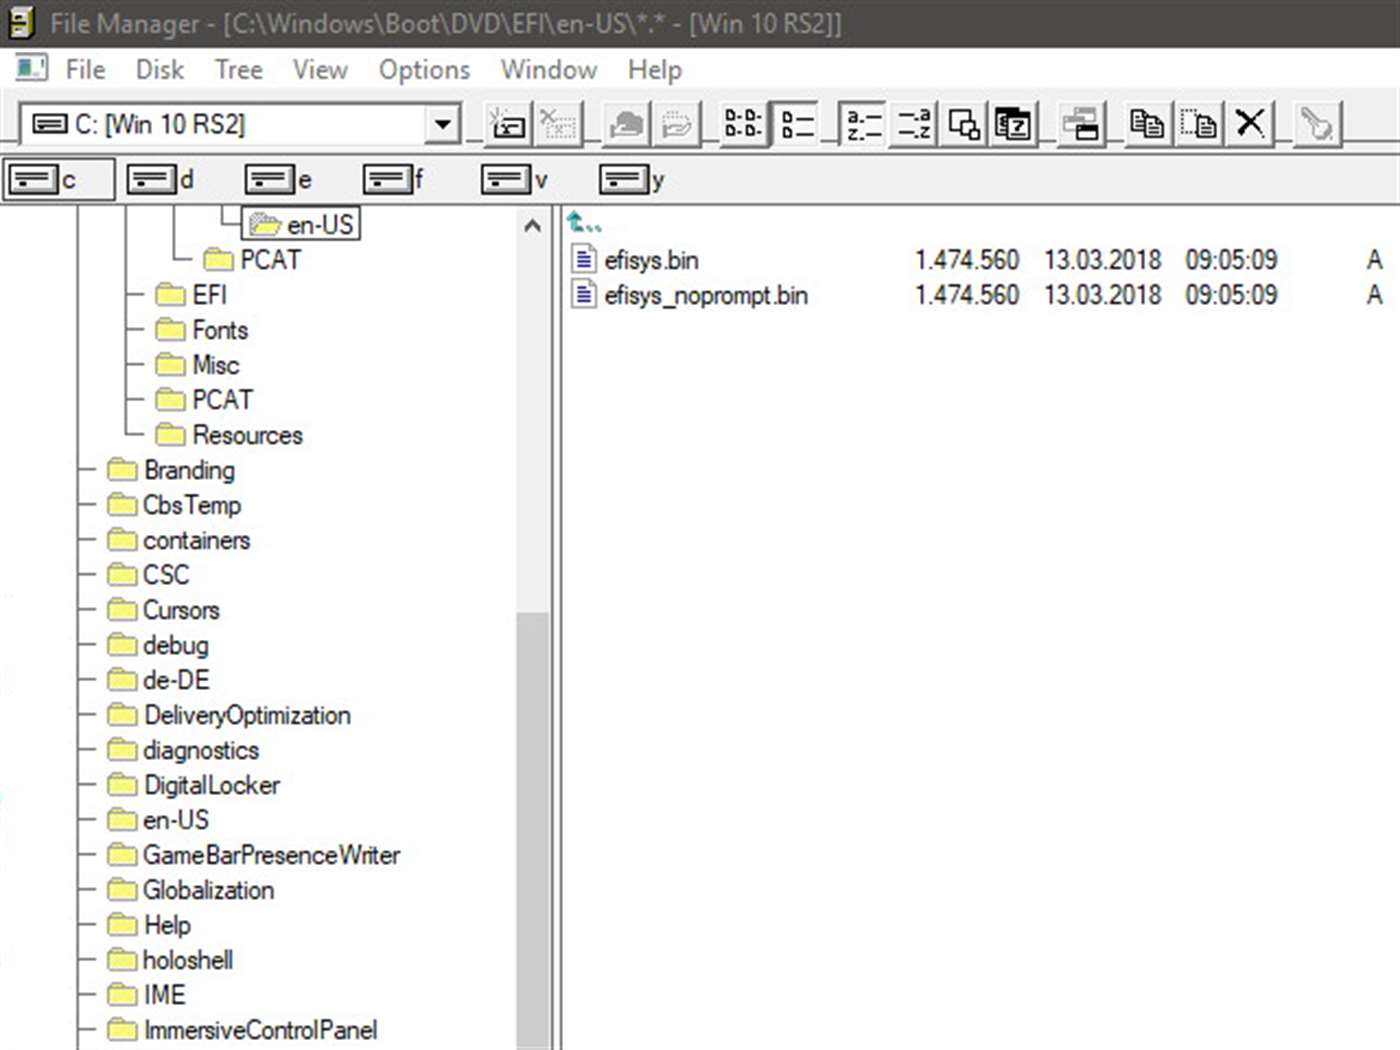 Windows 8 Windows File Manager full